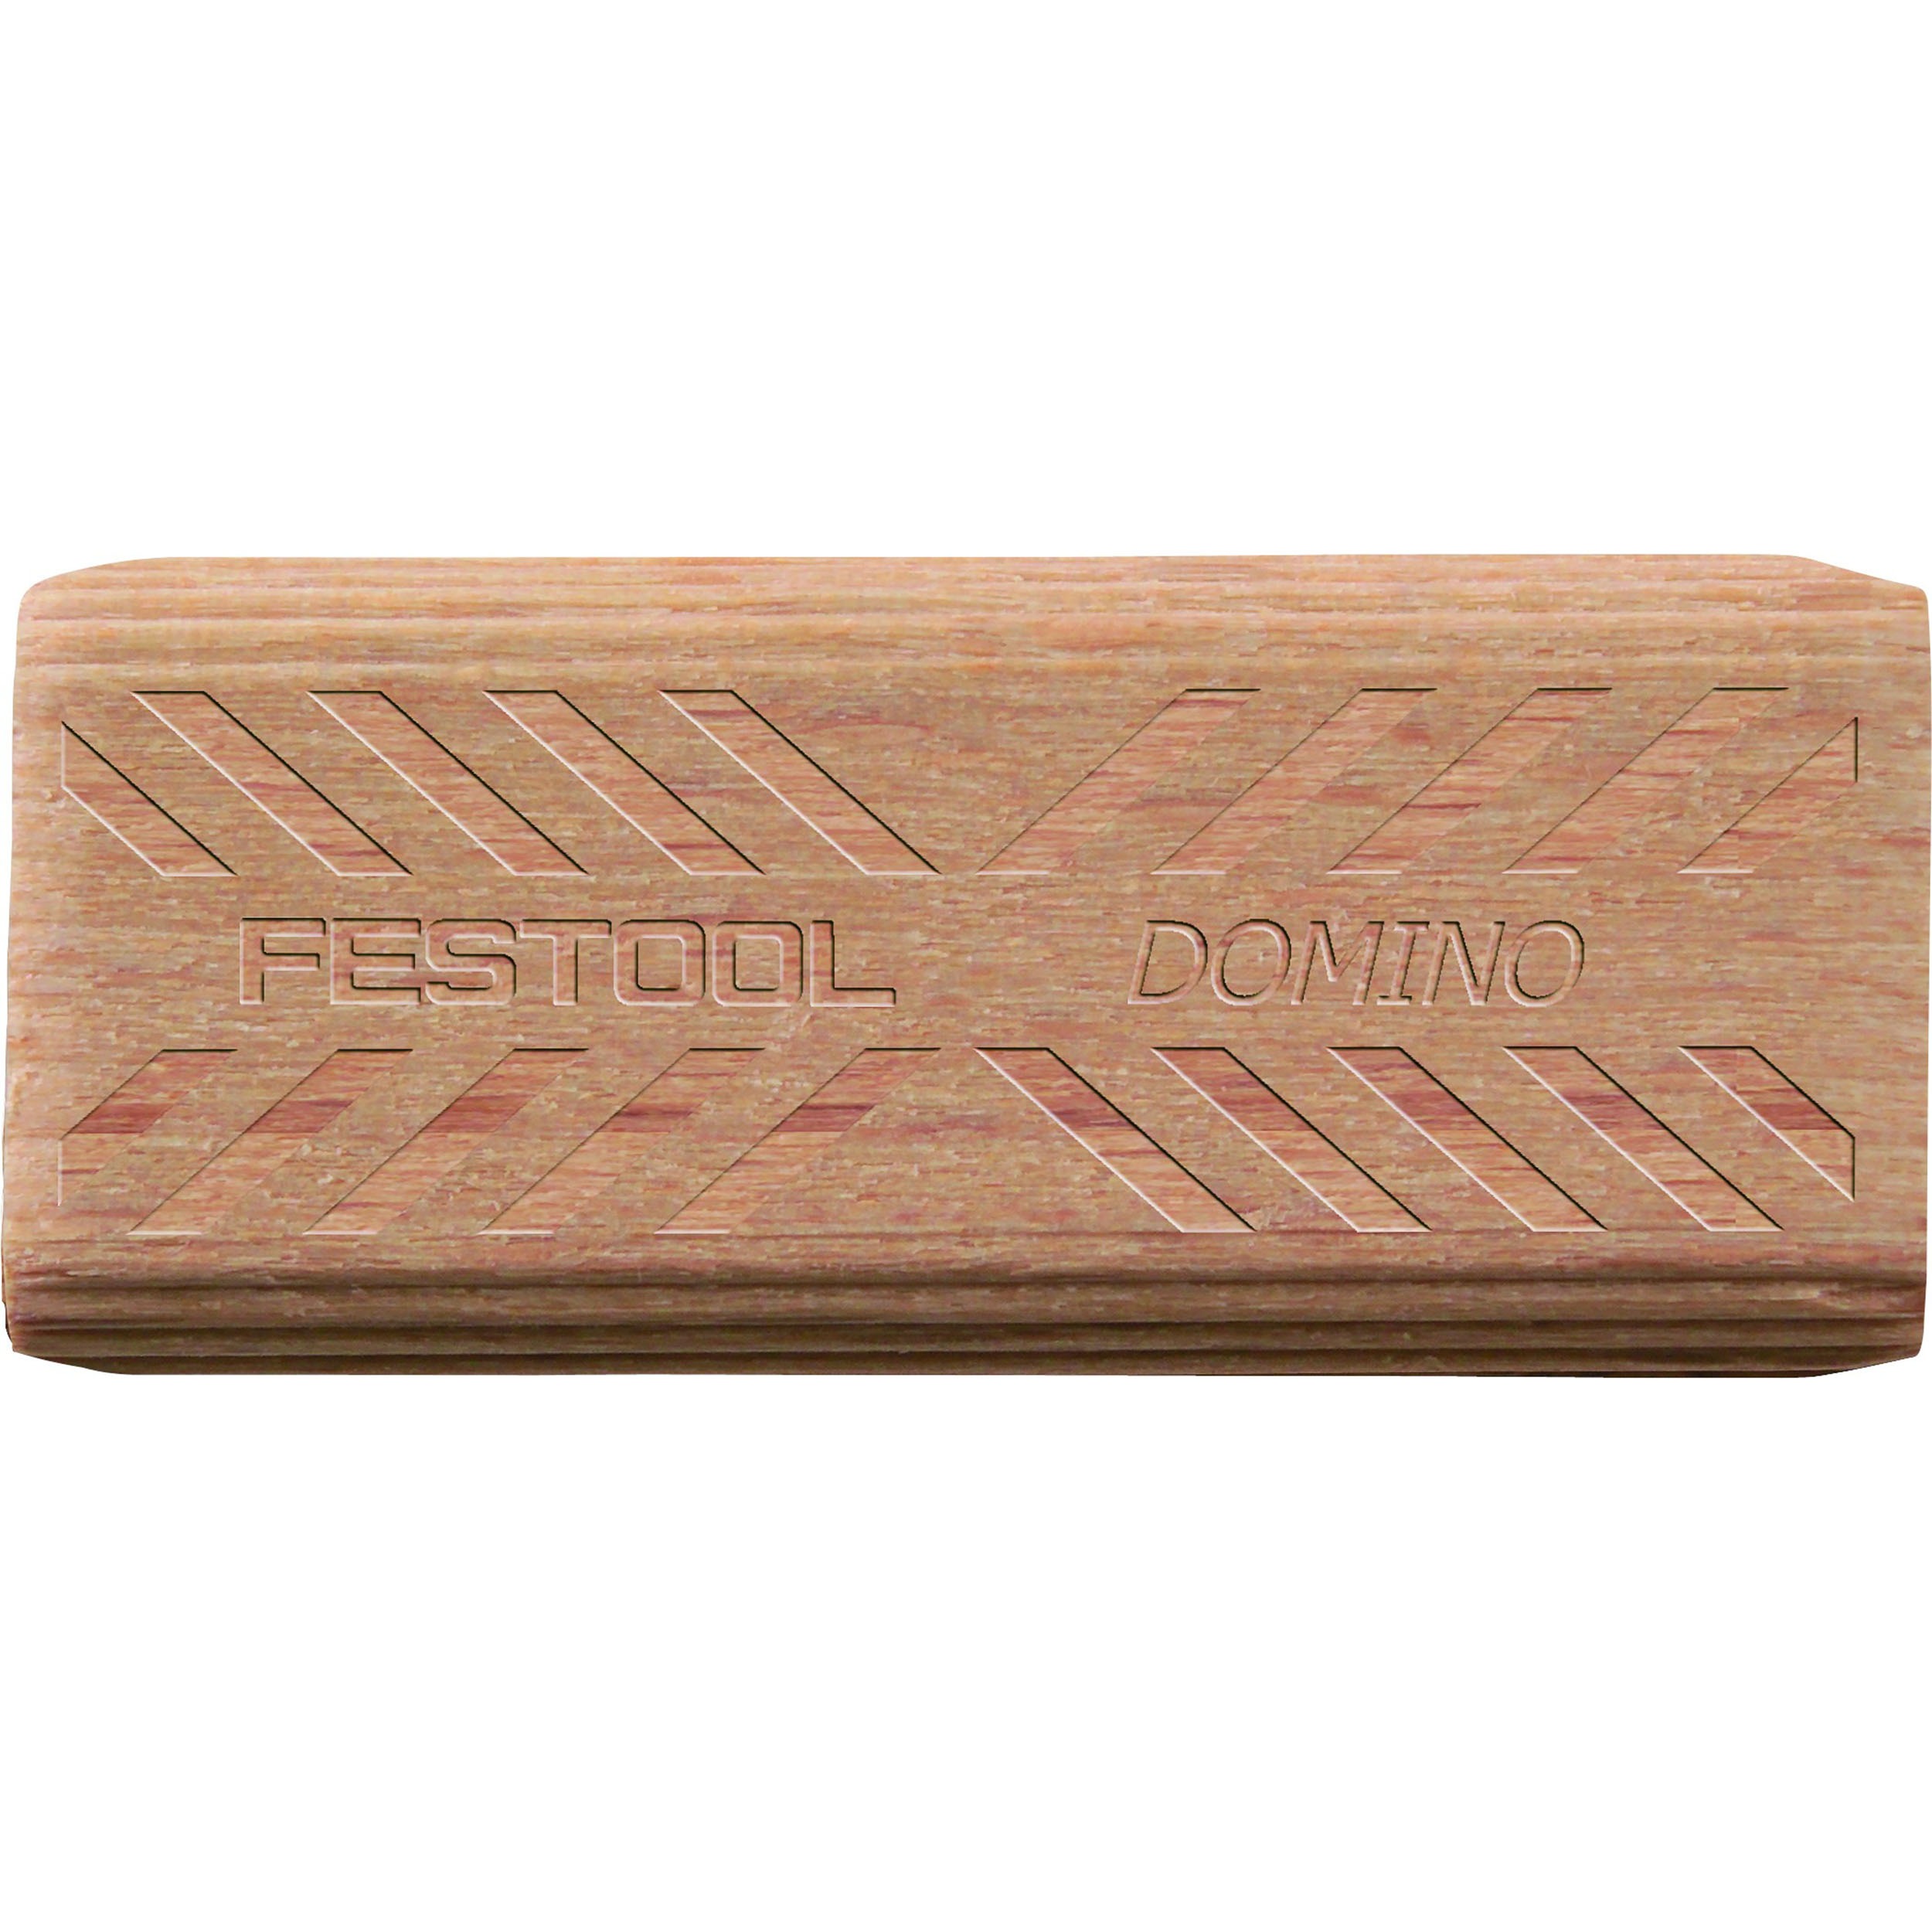 Festool Dominos, 10mm X 50mm, 510 Pieces